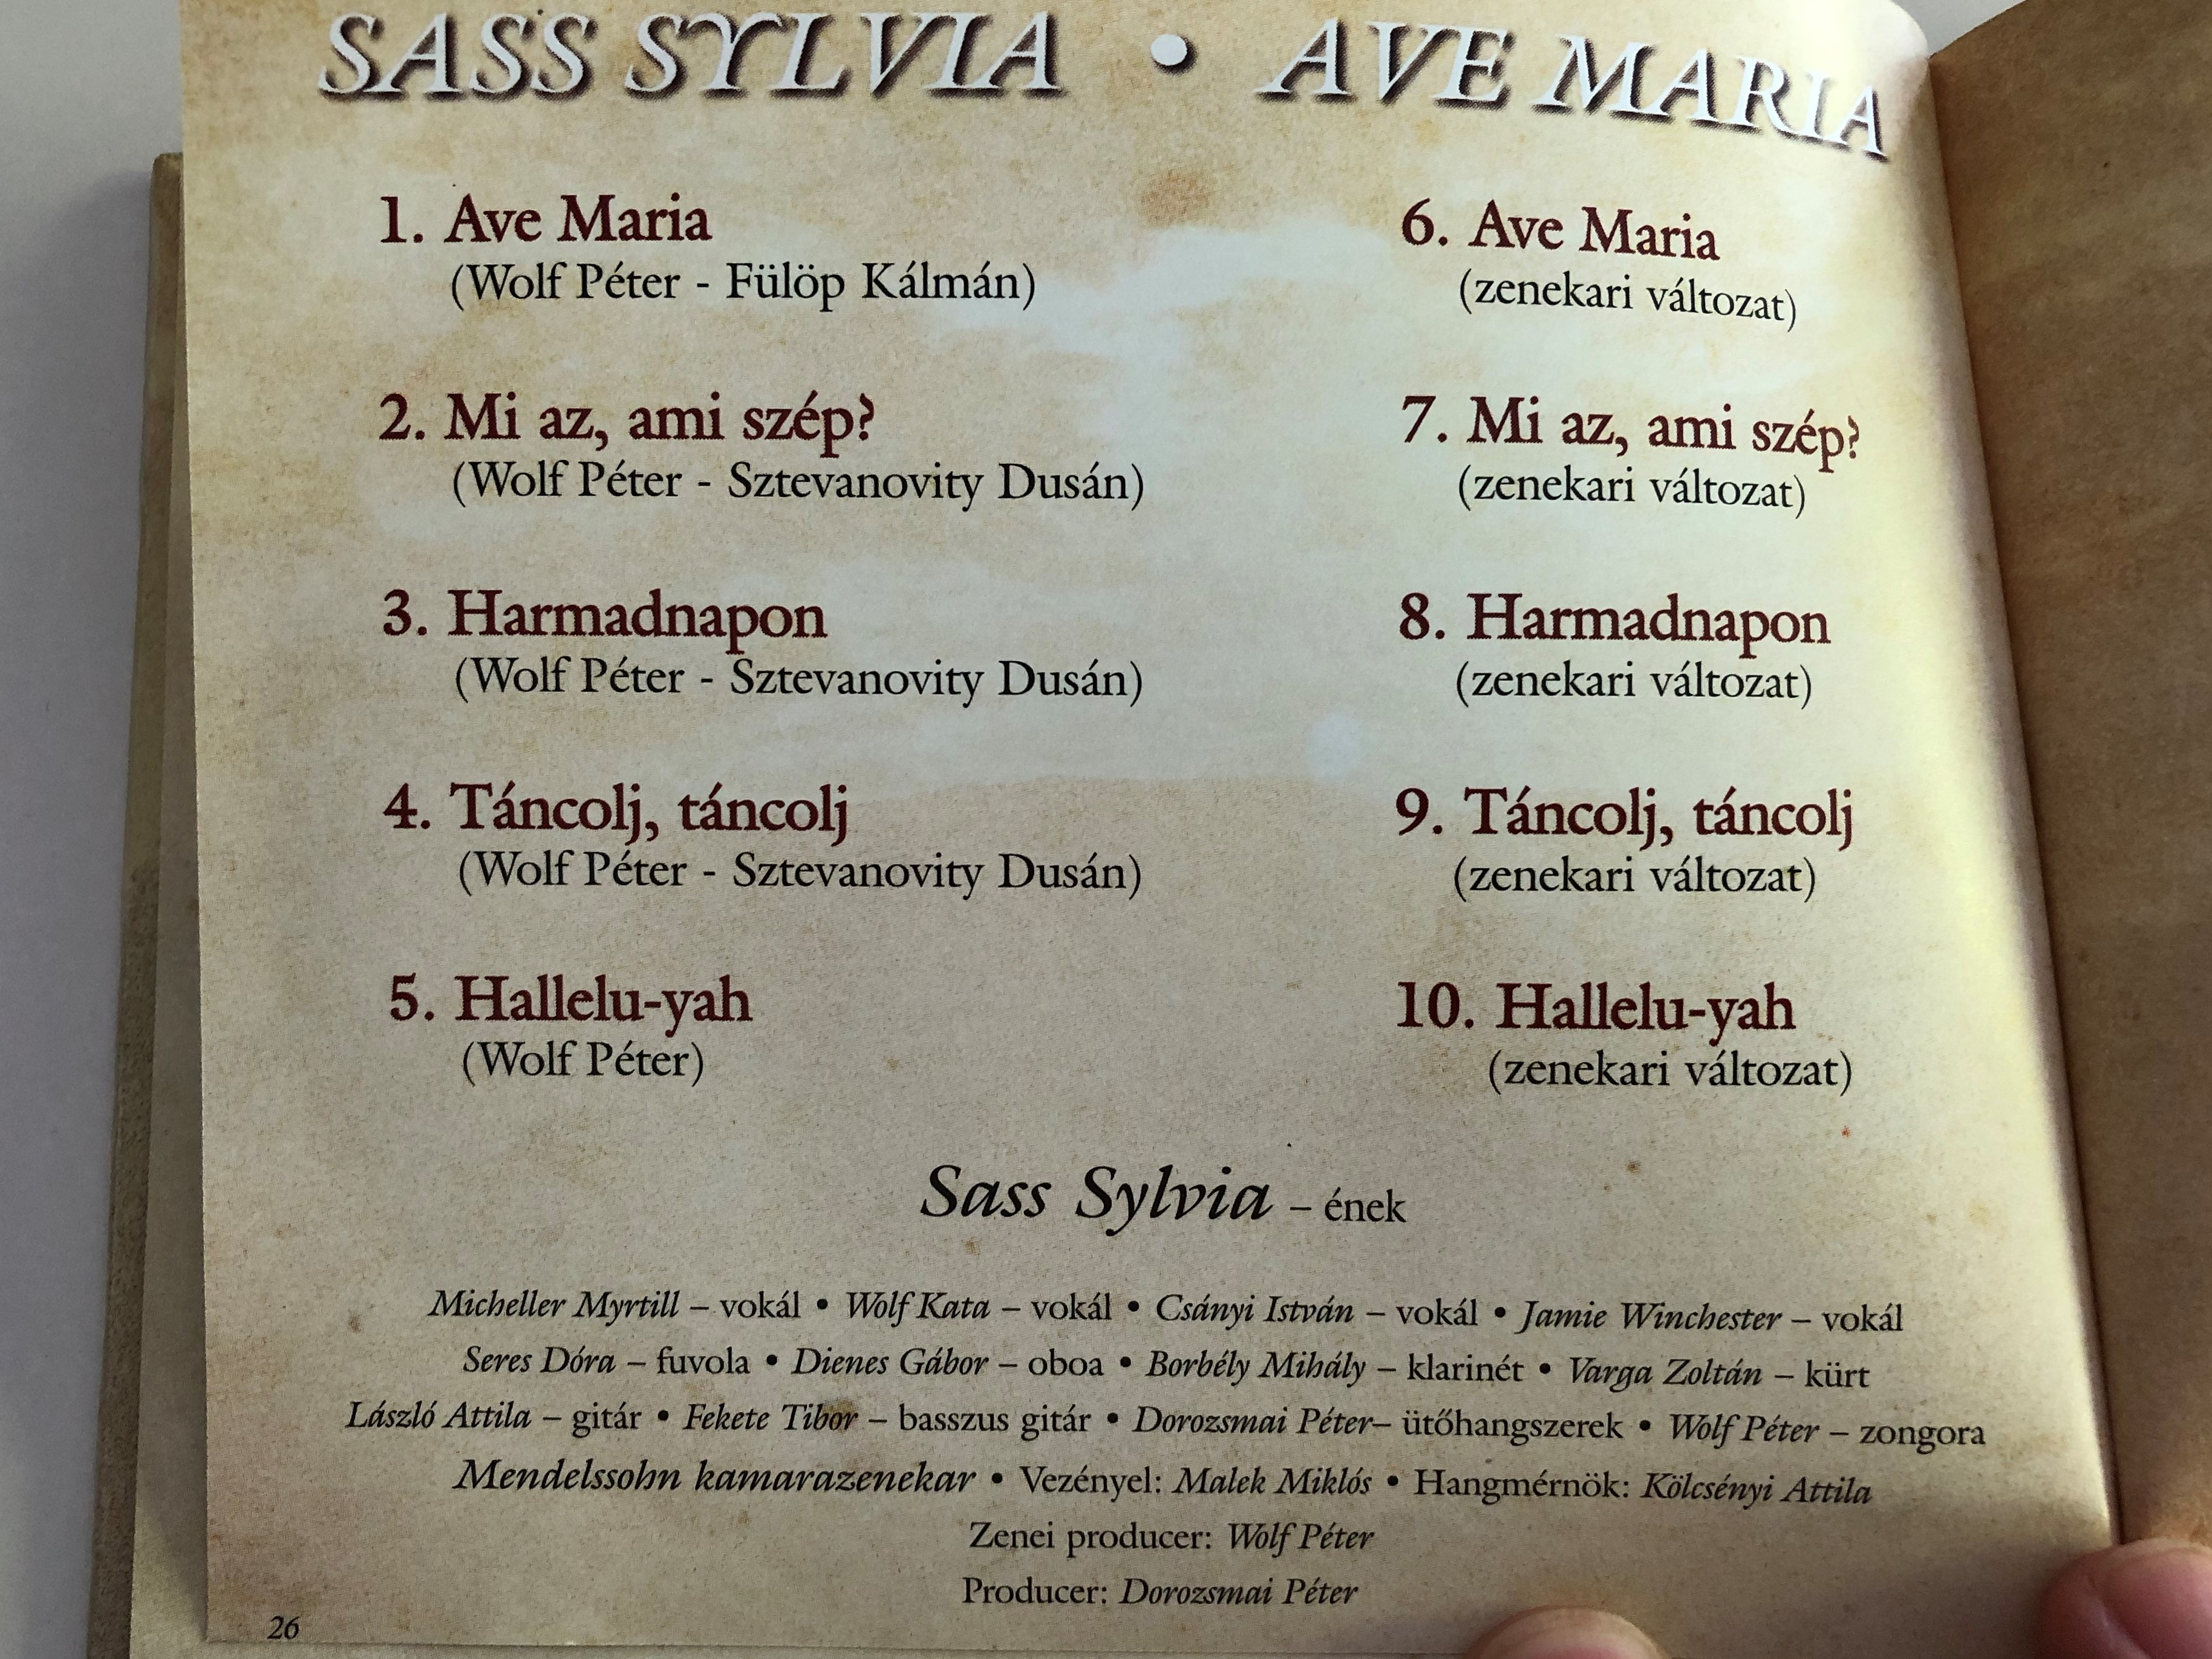 sass-sylvia-ave-maria-harmadnapon-hallelu-yah-mi-az-ami-sz-p-audio-cd-2004-tom-tom-records-ttcd-64-8-.jpg